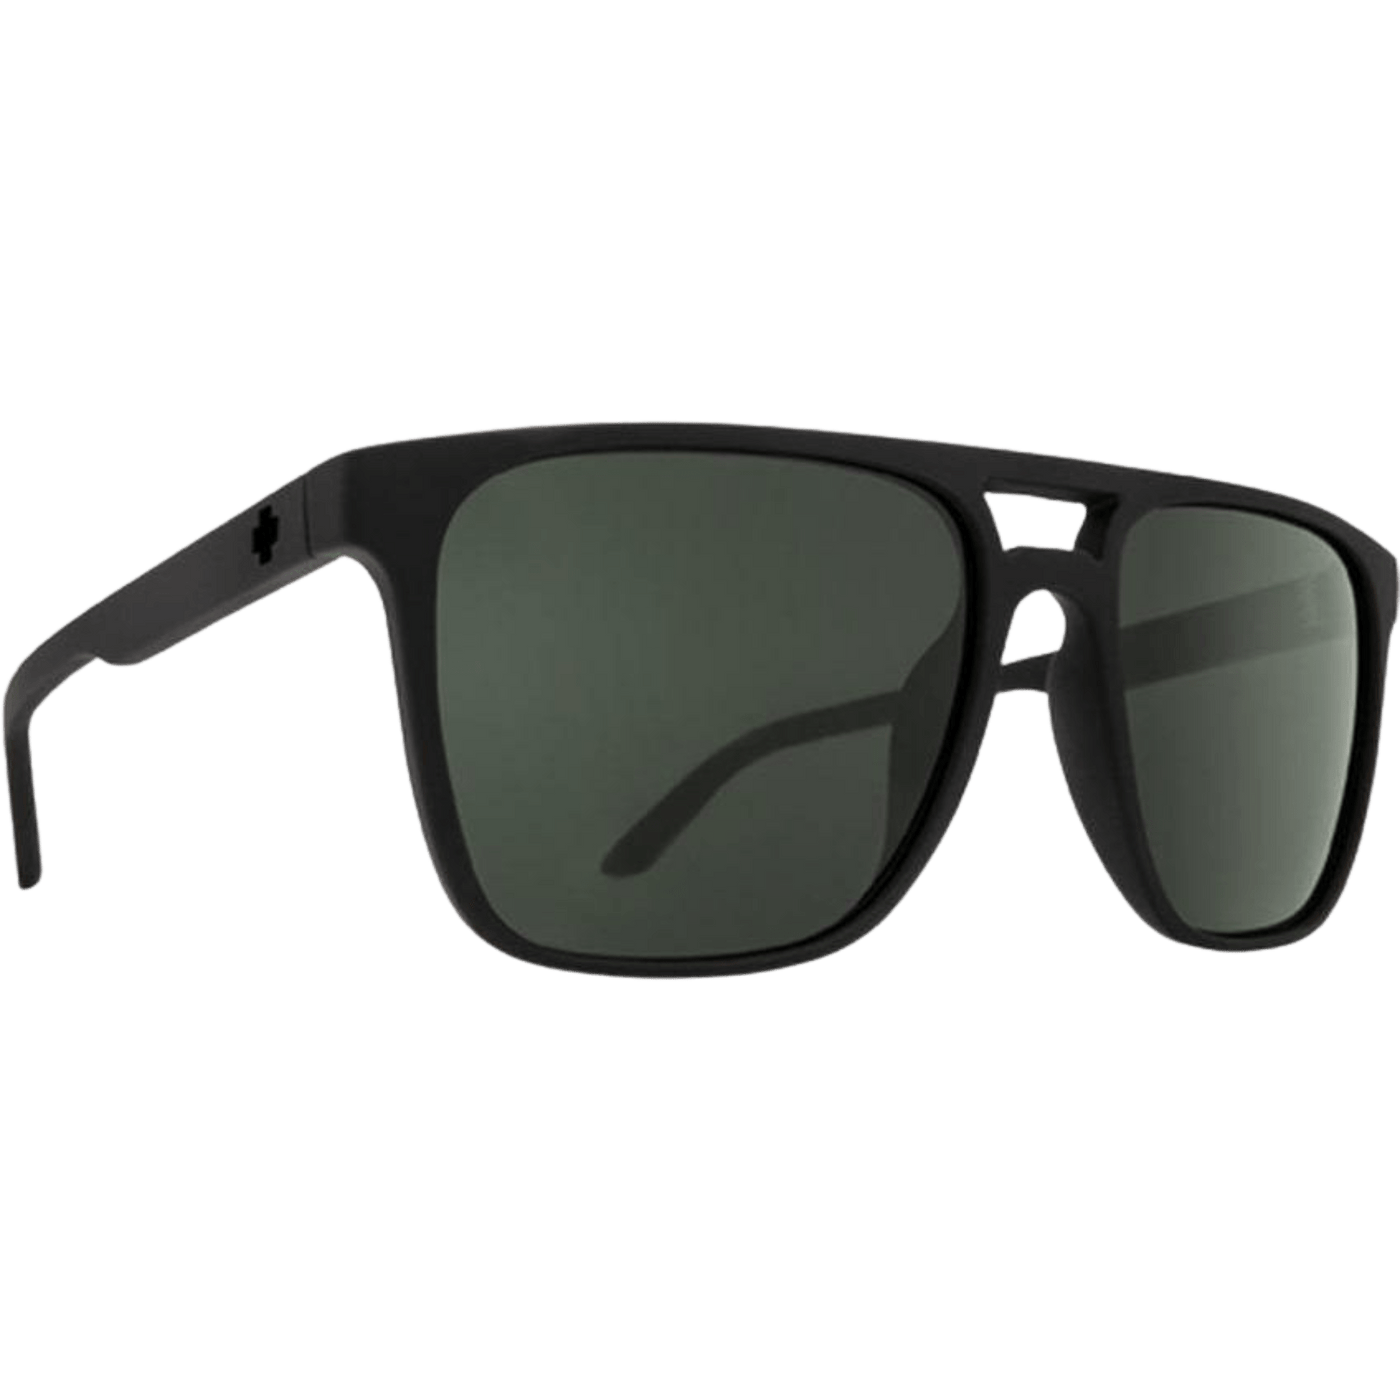 SPY CZAR Polarized Sunglasses, Happy Lens - Black 8Lines Shop - Fast Shipping